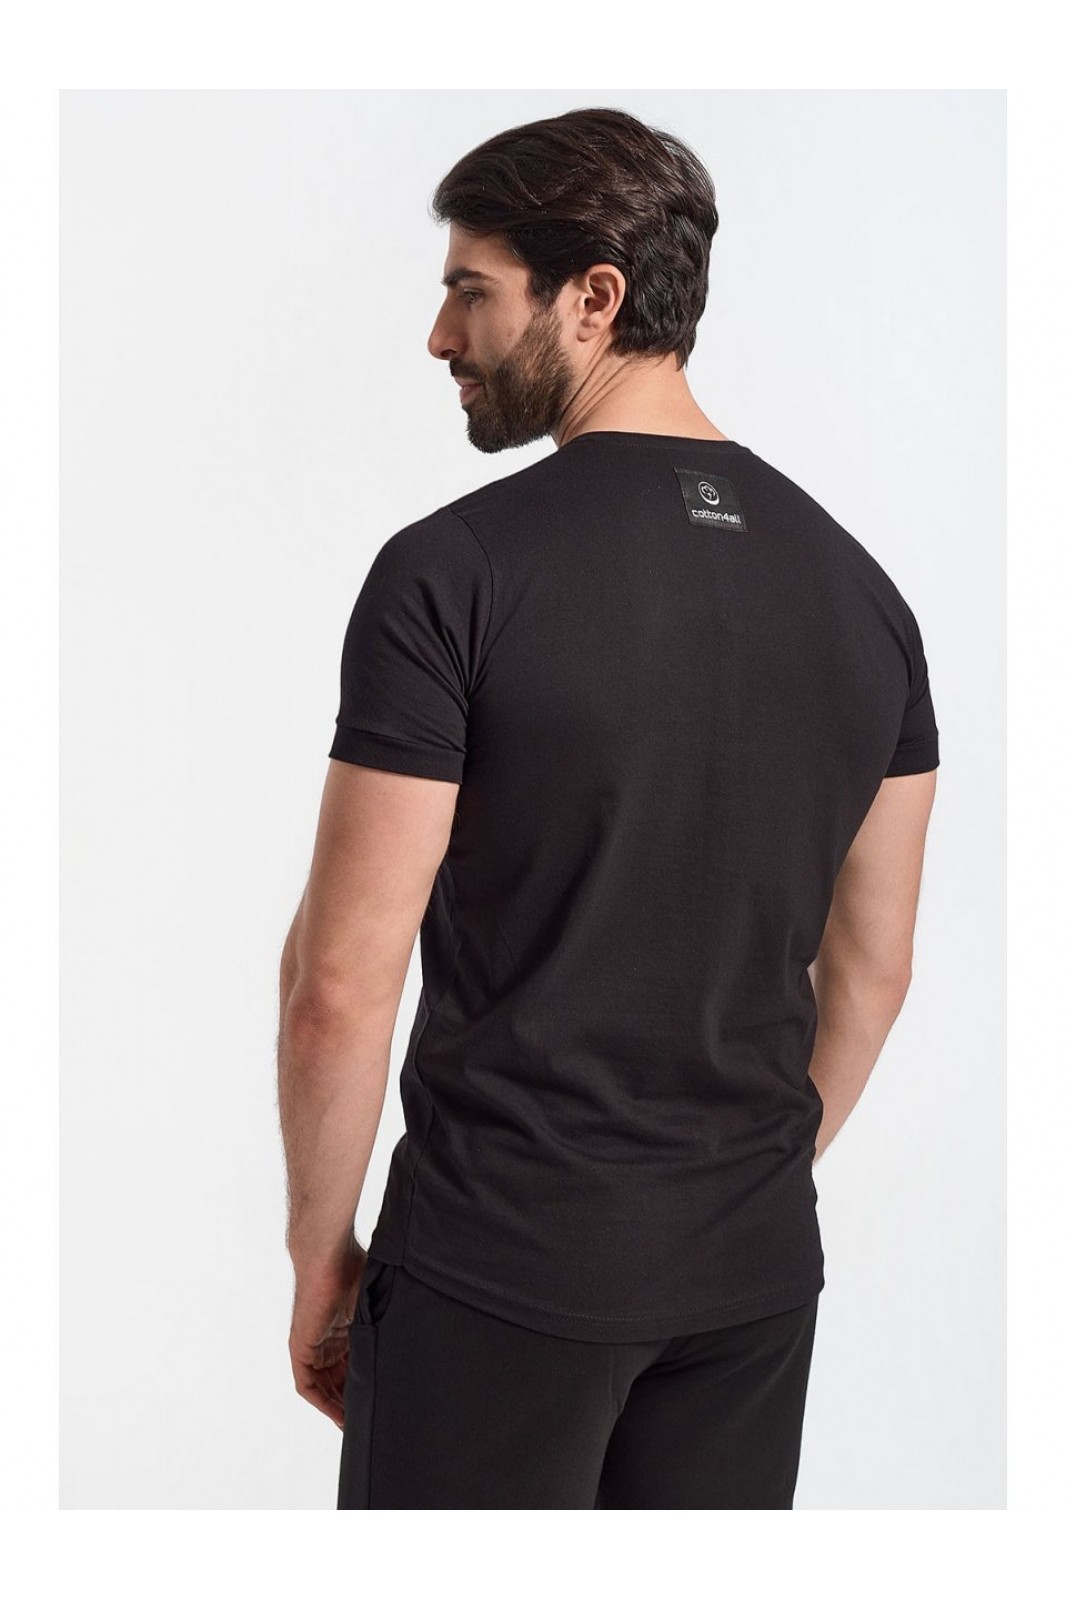 Herren T-Shirt Cotton4all Project Schwarz